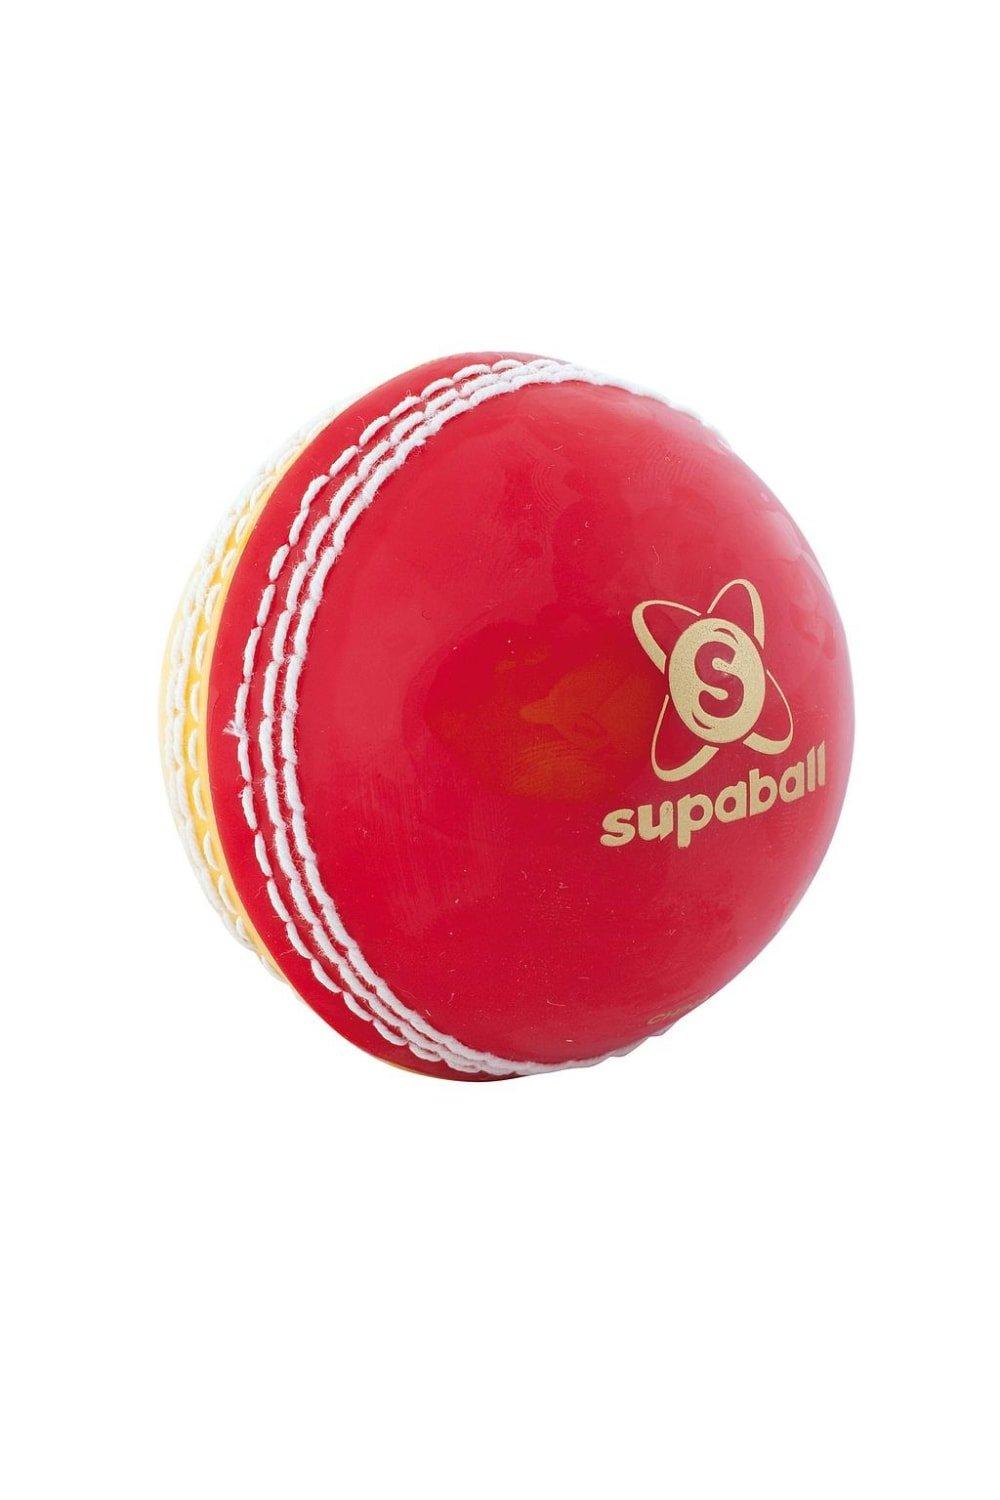 Supaball Cricket Ball